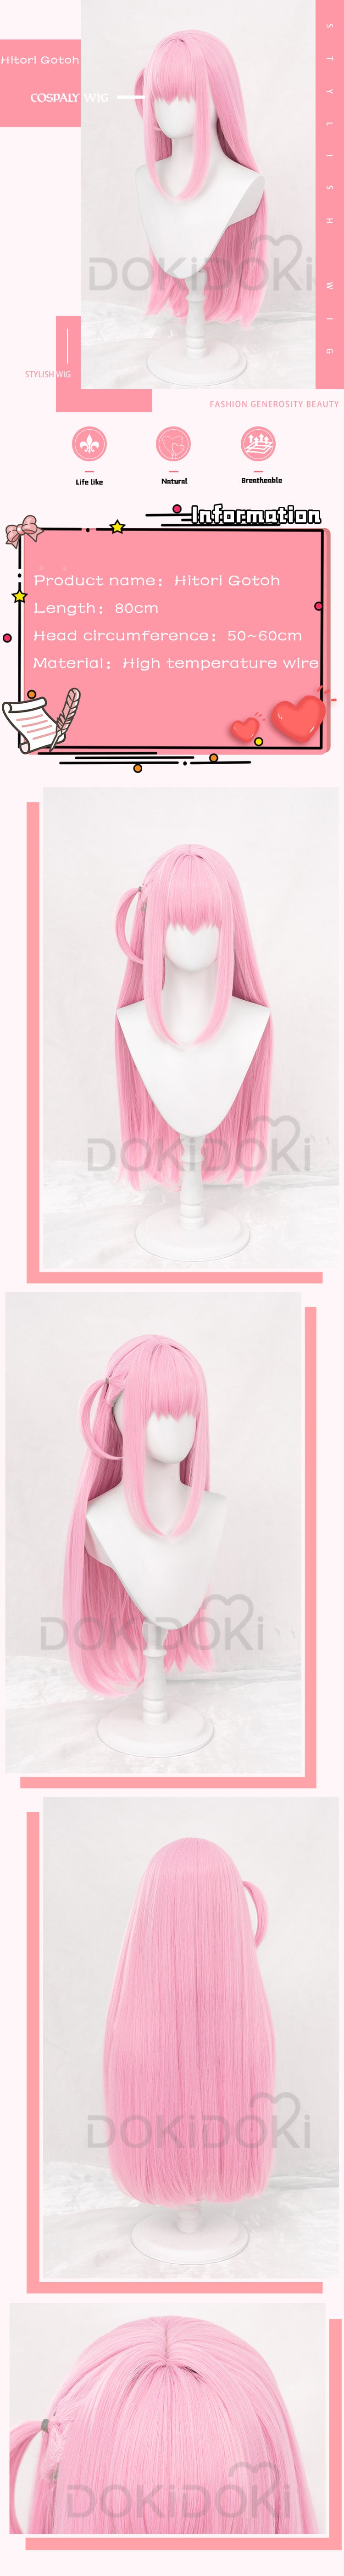 BOCCHI THE ROCK! Hitori Gotoh hair Pink long cos full Wigs